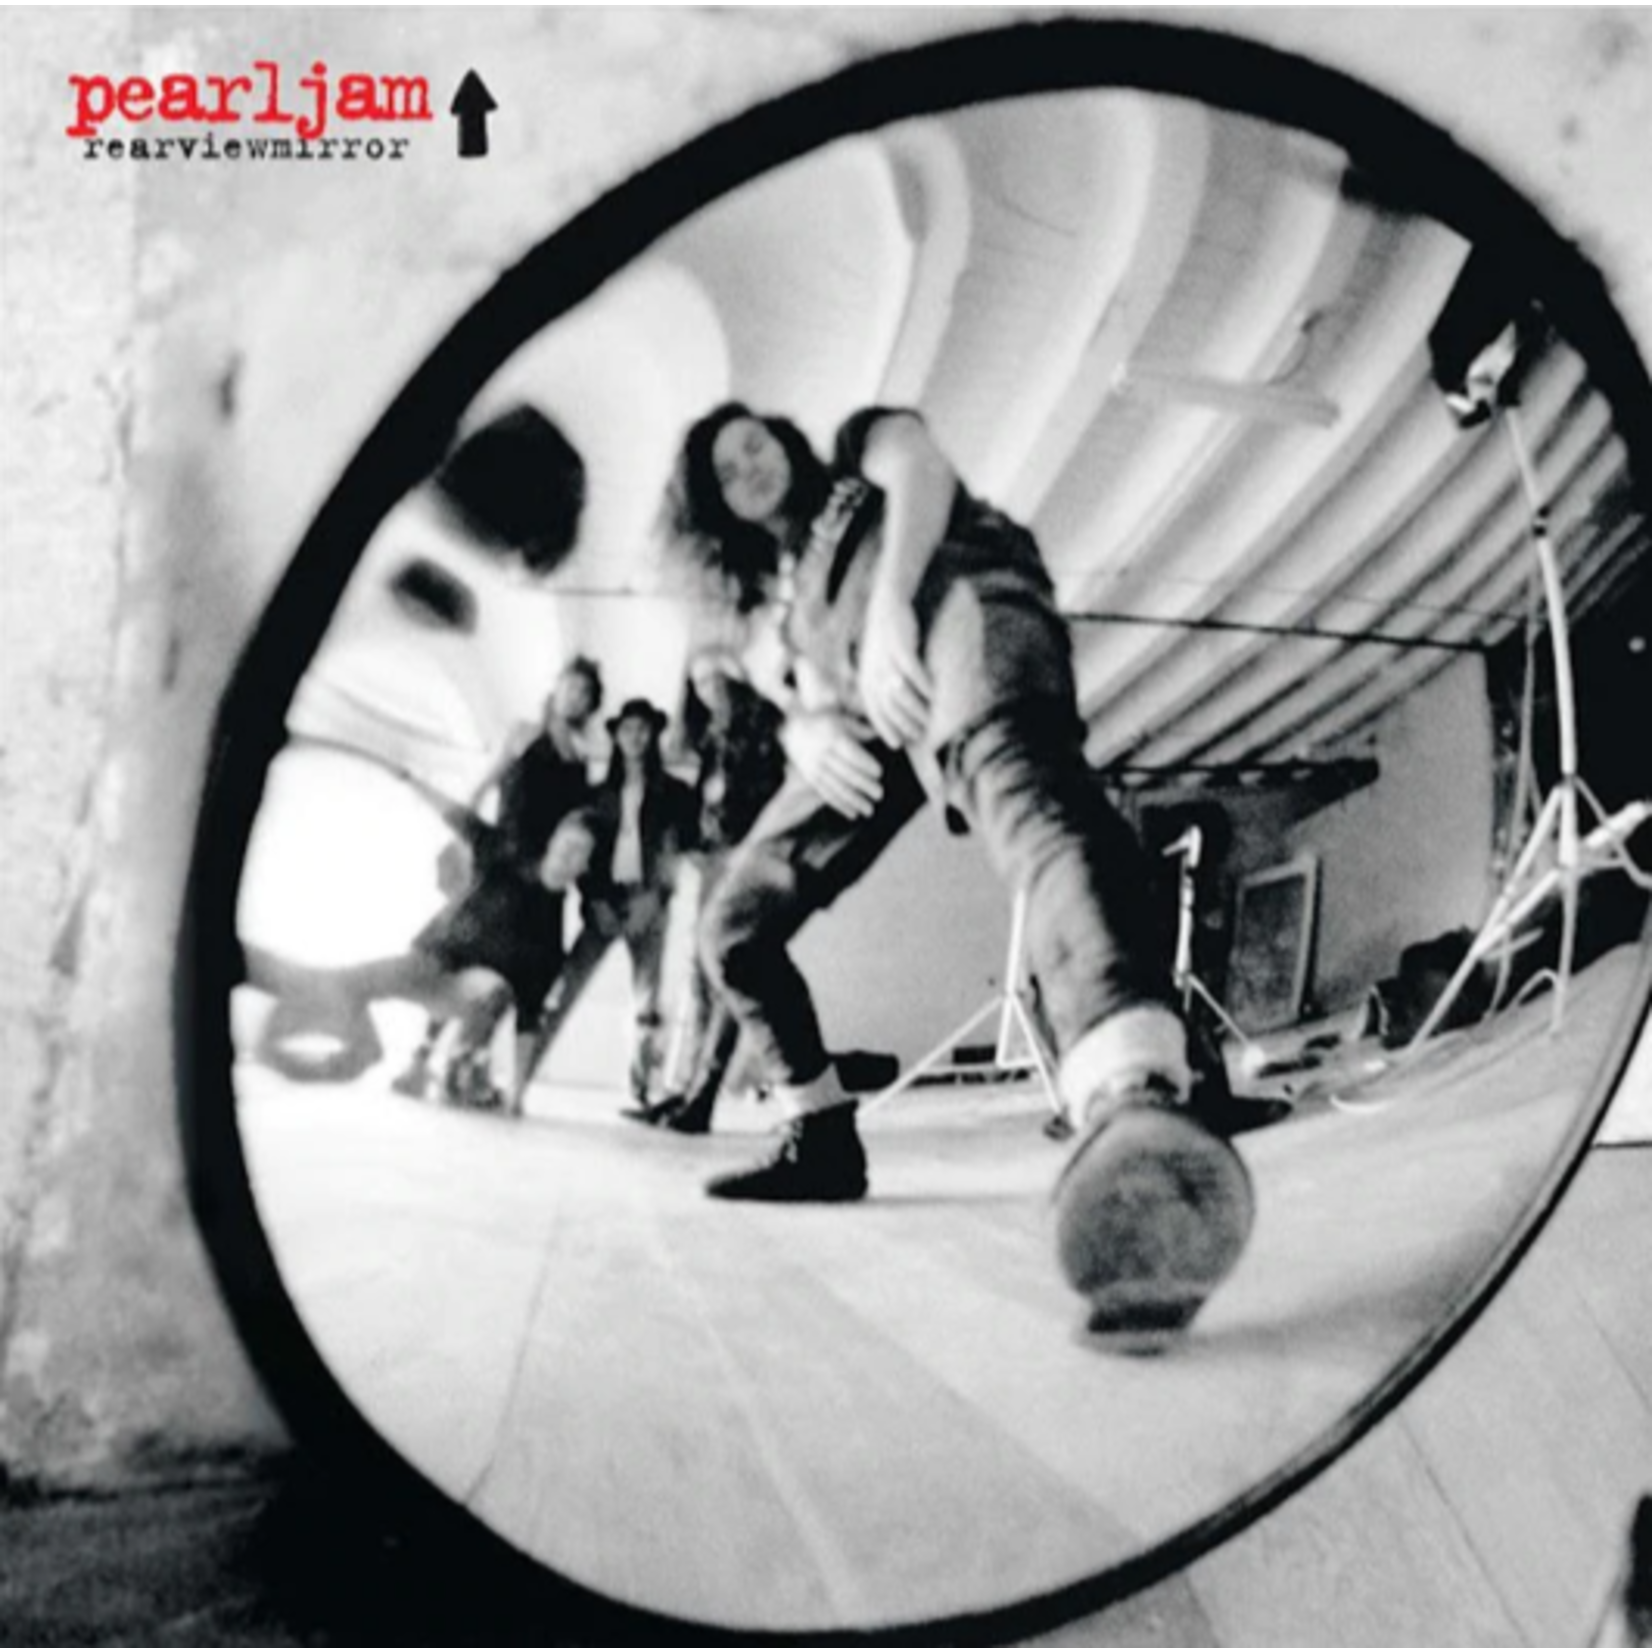 [New] Pearl Jam - Rearviewmirror: Volume 1 (2LP) Greatest Hits 1991-2003